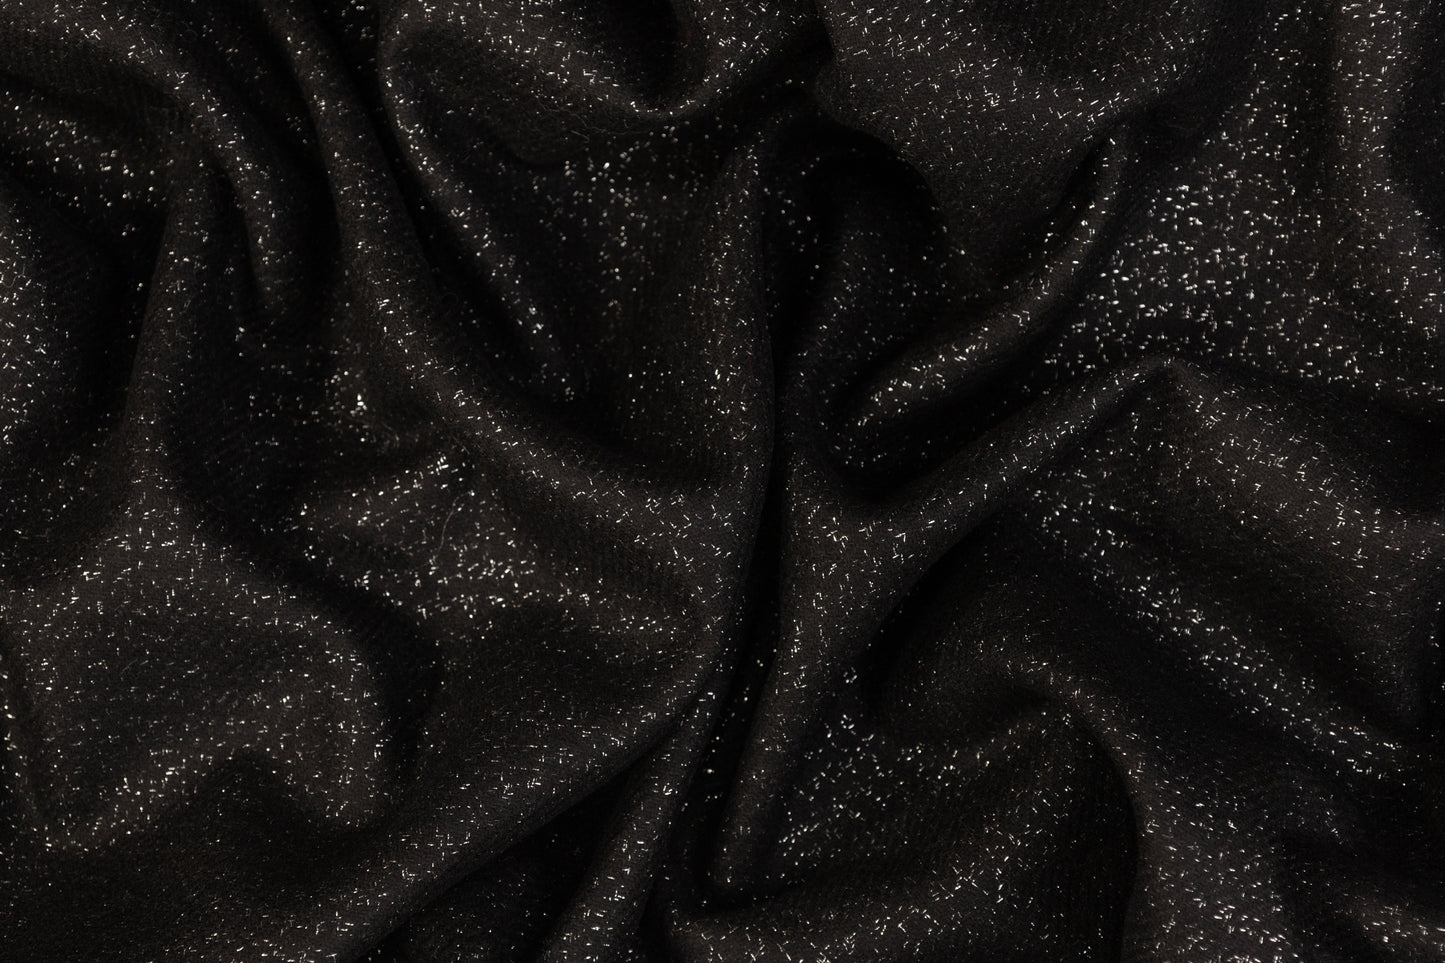 Double Faced Metallic Italian Wool Coating - Black / Silver